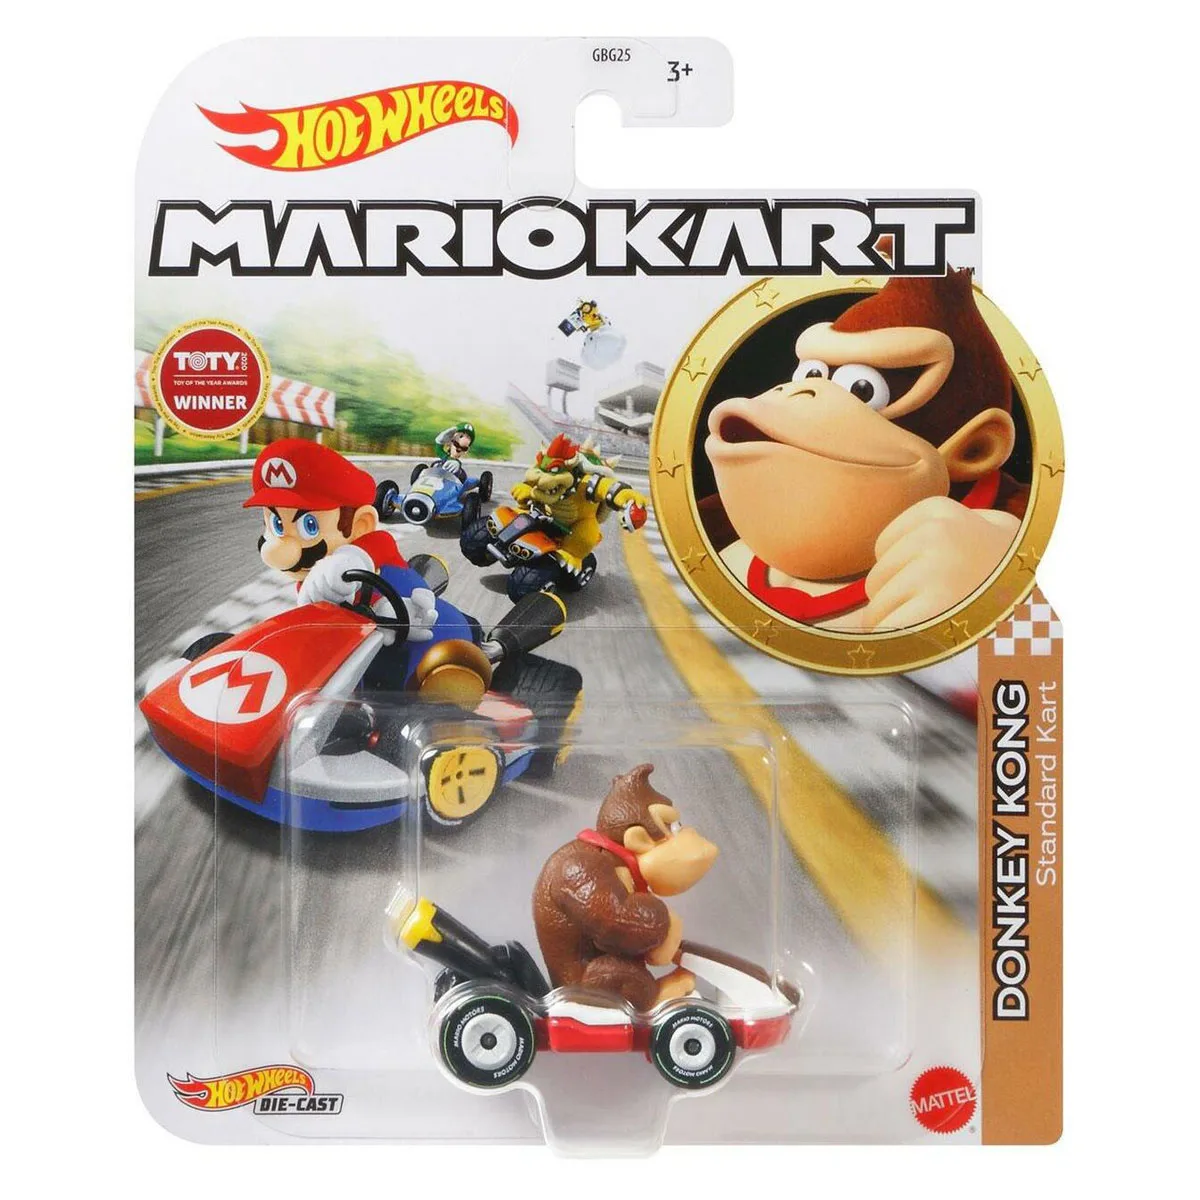 

Hot Wheels Mario Kart Character Vehicles GBG25 - Donkey Kong - Standard Kart